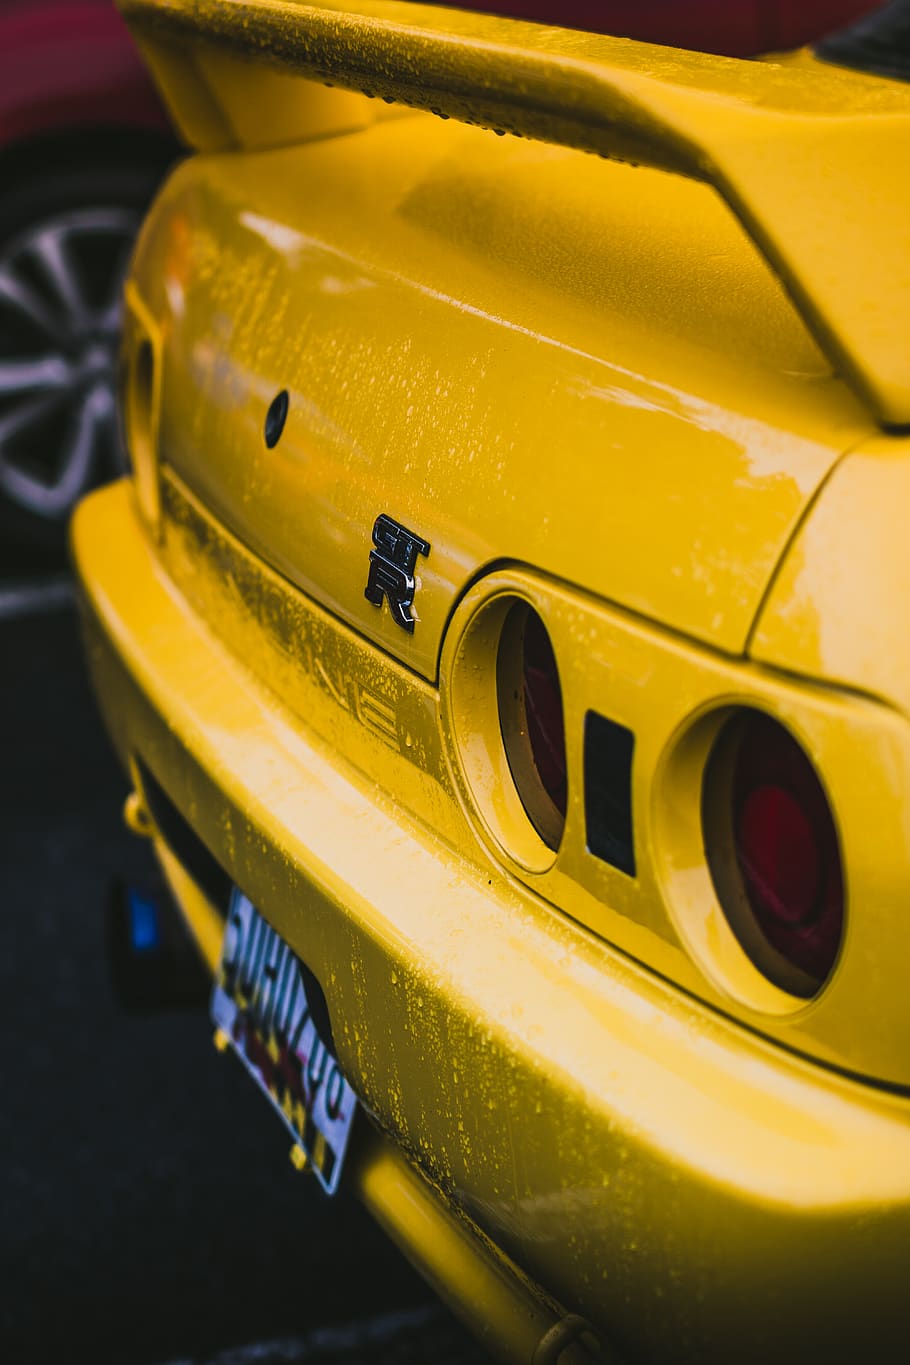 Nissan Skyline GTR, yellow, mode of transportation, car, land vehicle